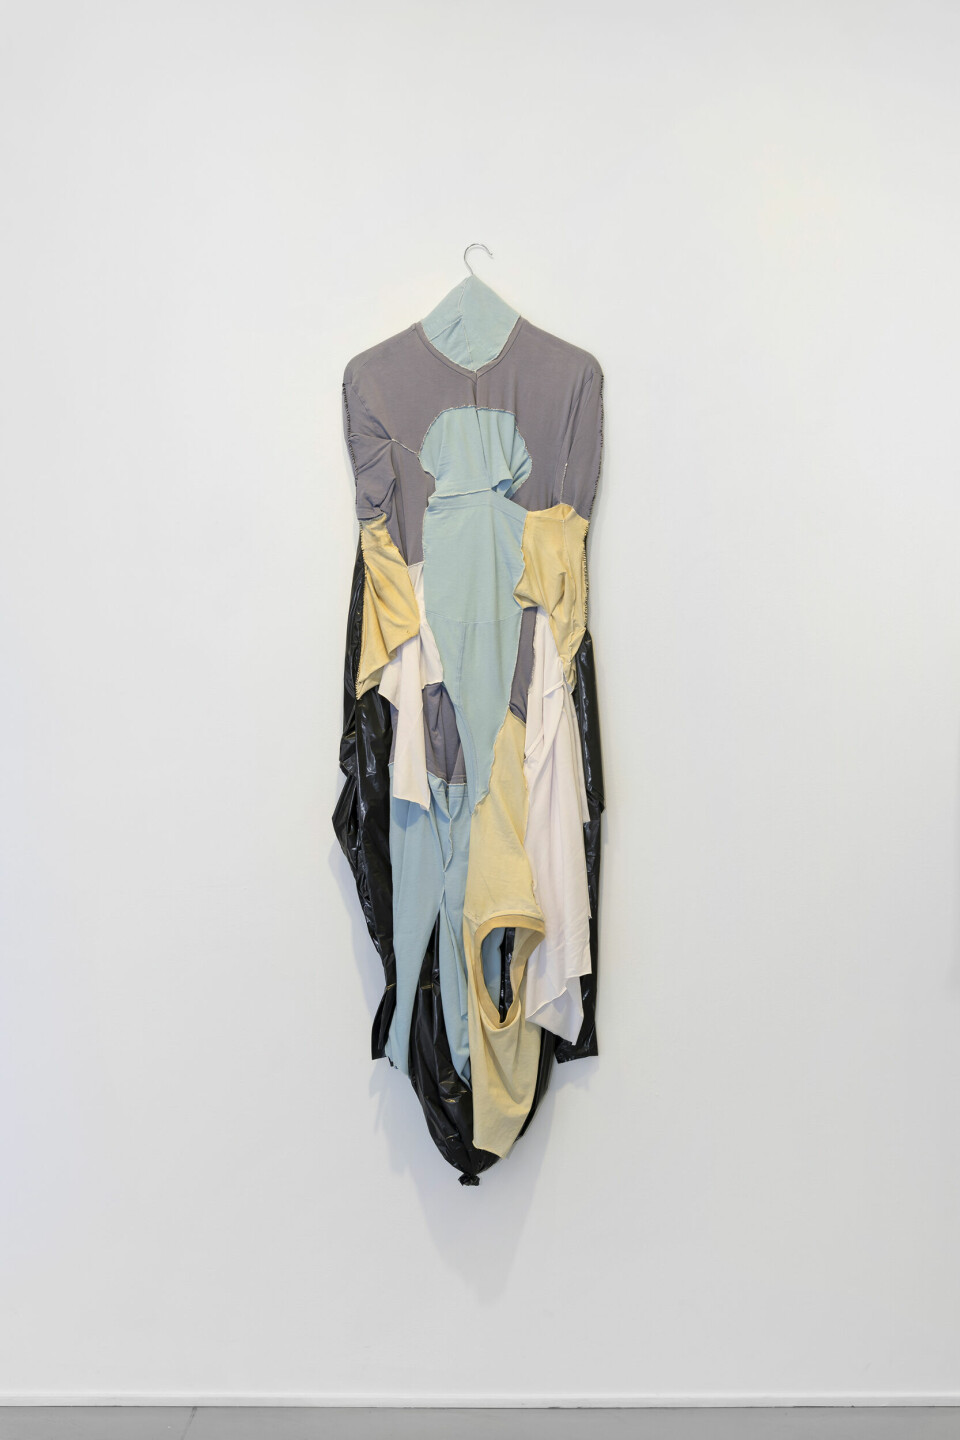 Leif Holmstrand, Self Portrait (2016), textile wall sculpture: T-shirt fabric, garbage bag plastic et cetera. Foto: Øystein Thorvaldsen